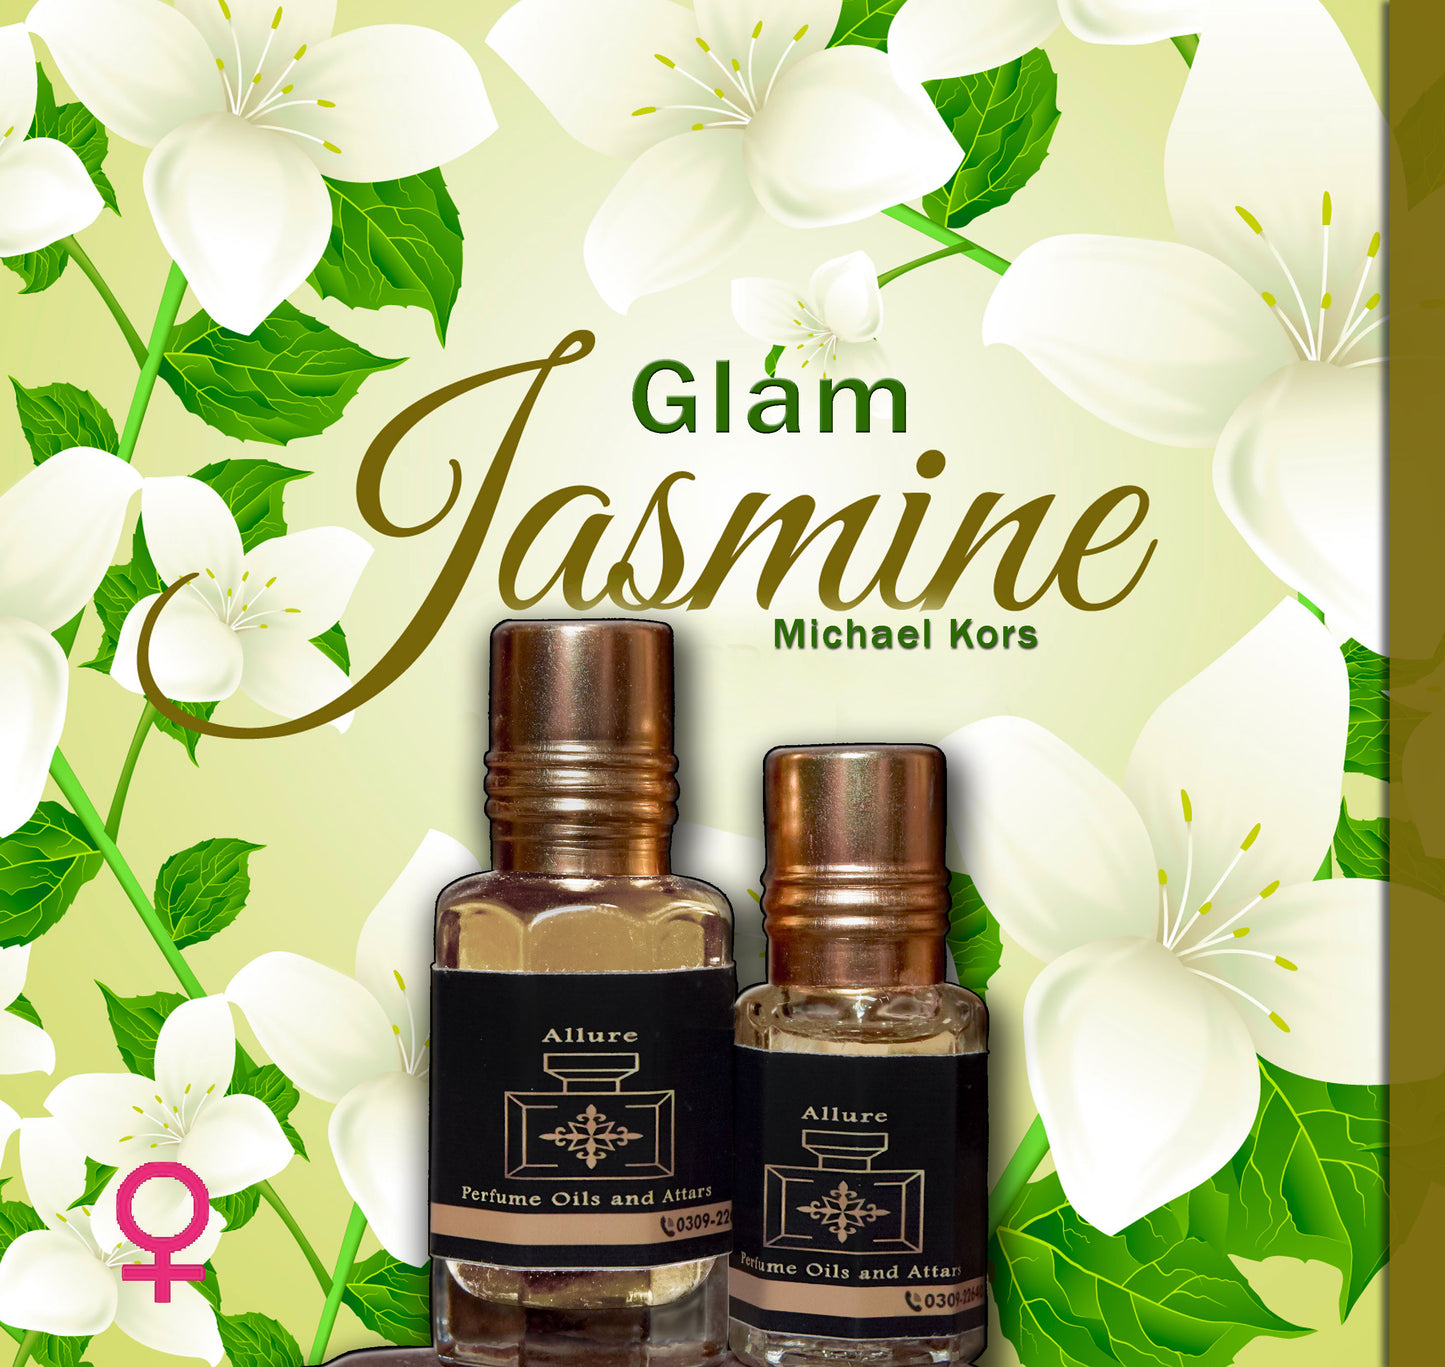 Glam Jasmine attar in high quality